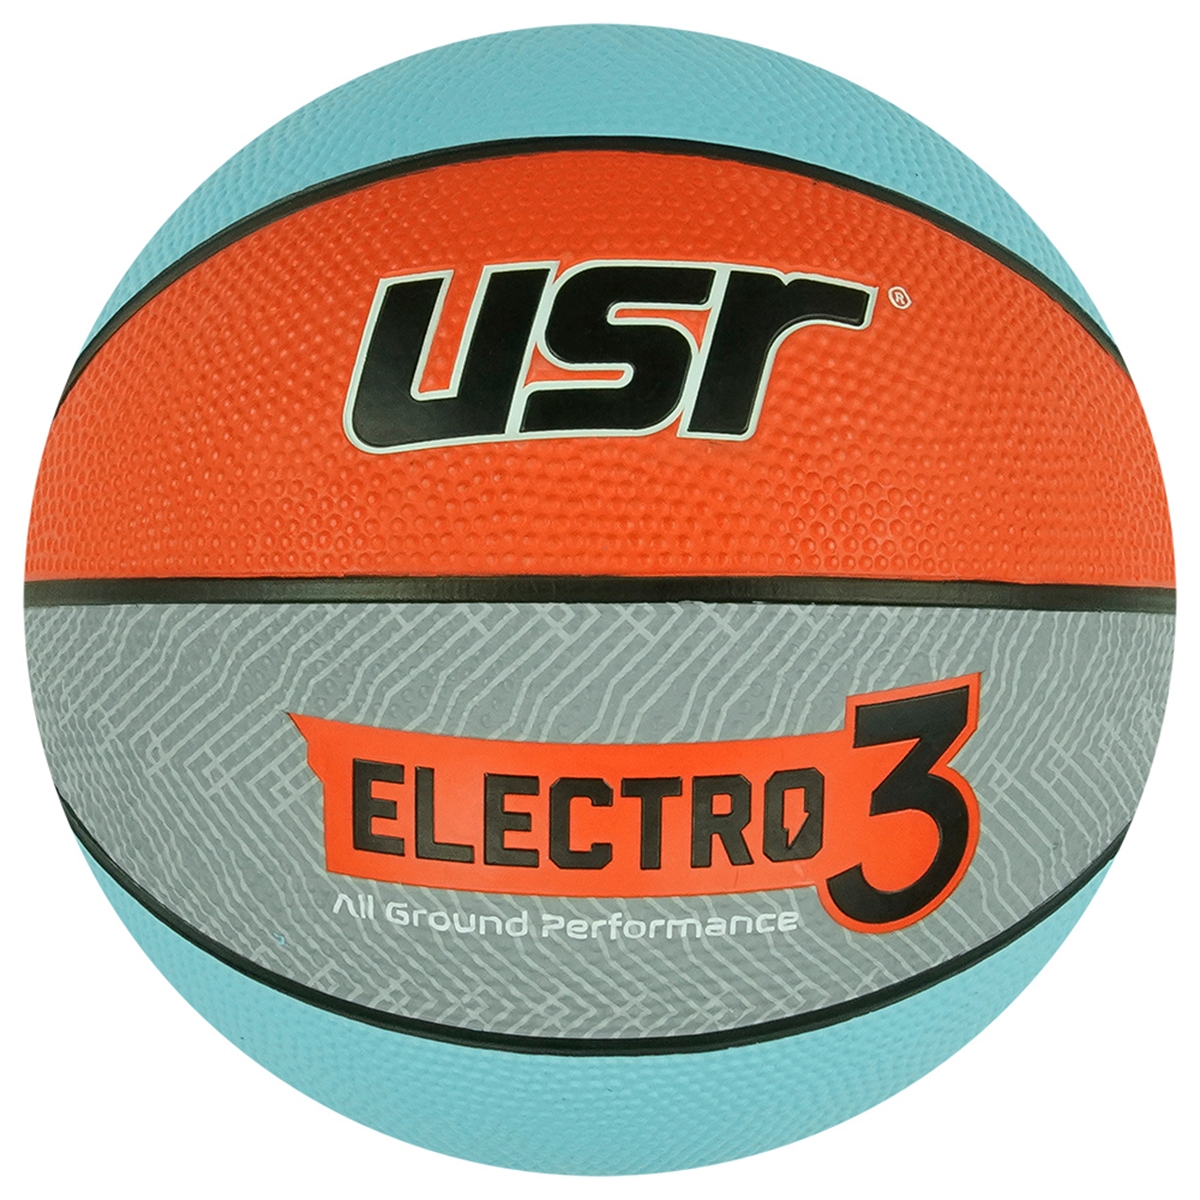 Electro3 Kauçuk 3 No Mini Basketbol Topu